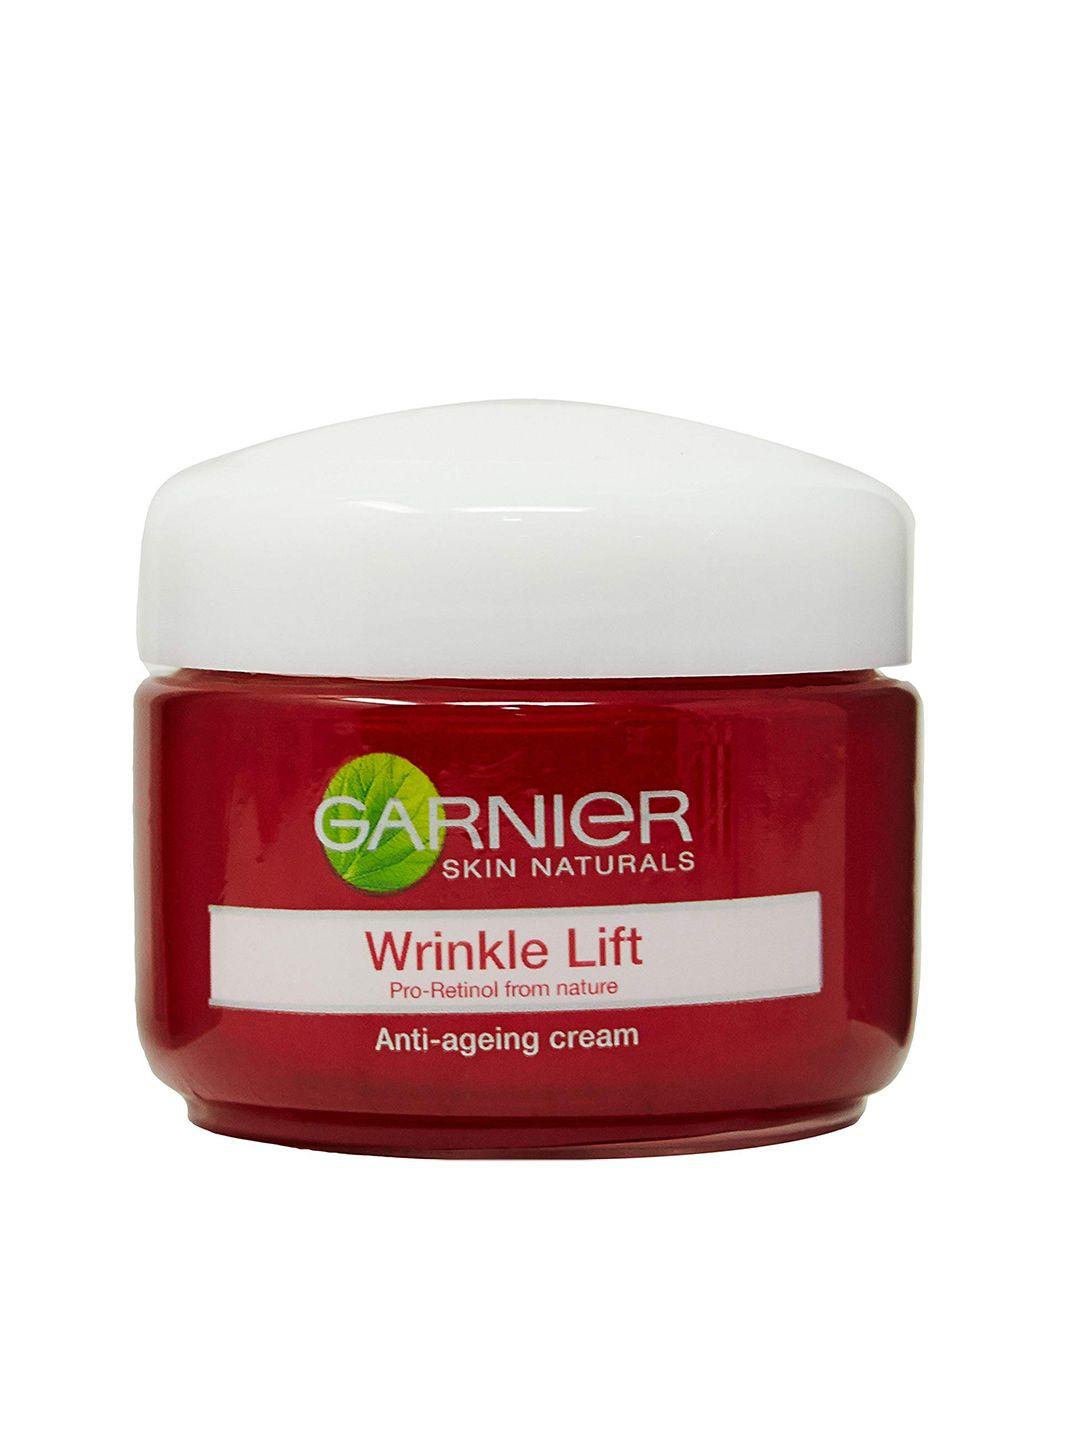 garnier wrinkle lift anti-ageing cream 40g